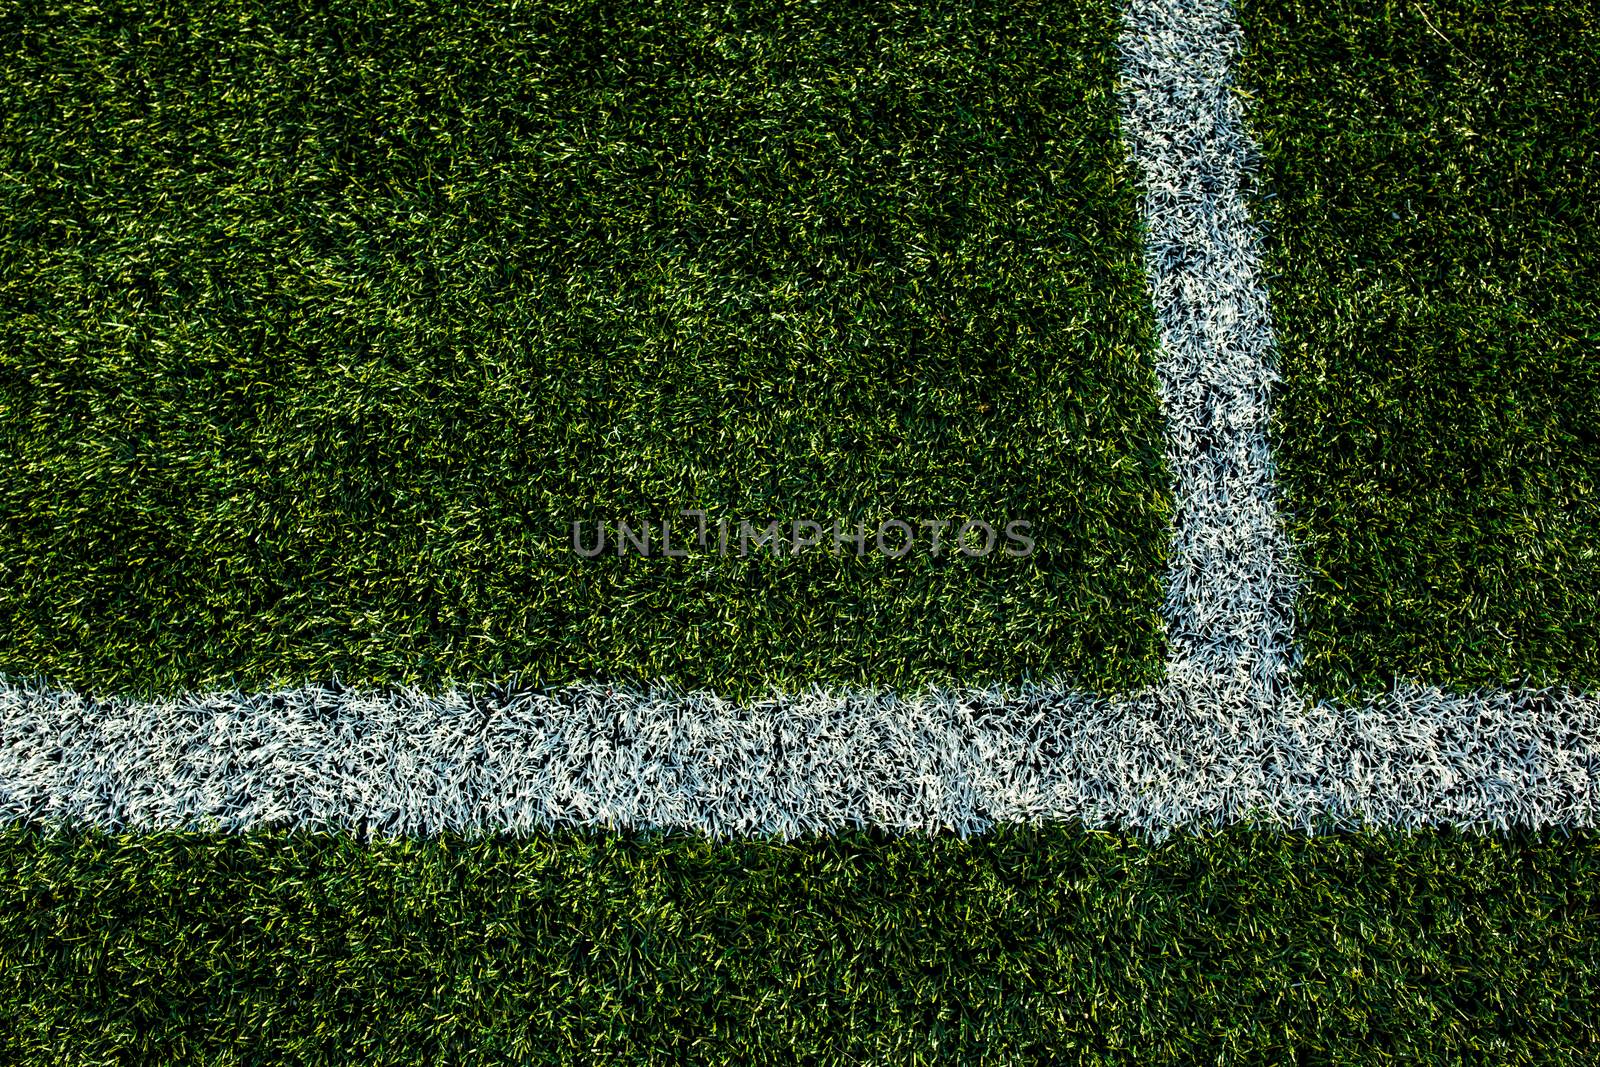 Soccery pitch - well cut grass of a soccer field by viktor_cap